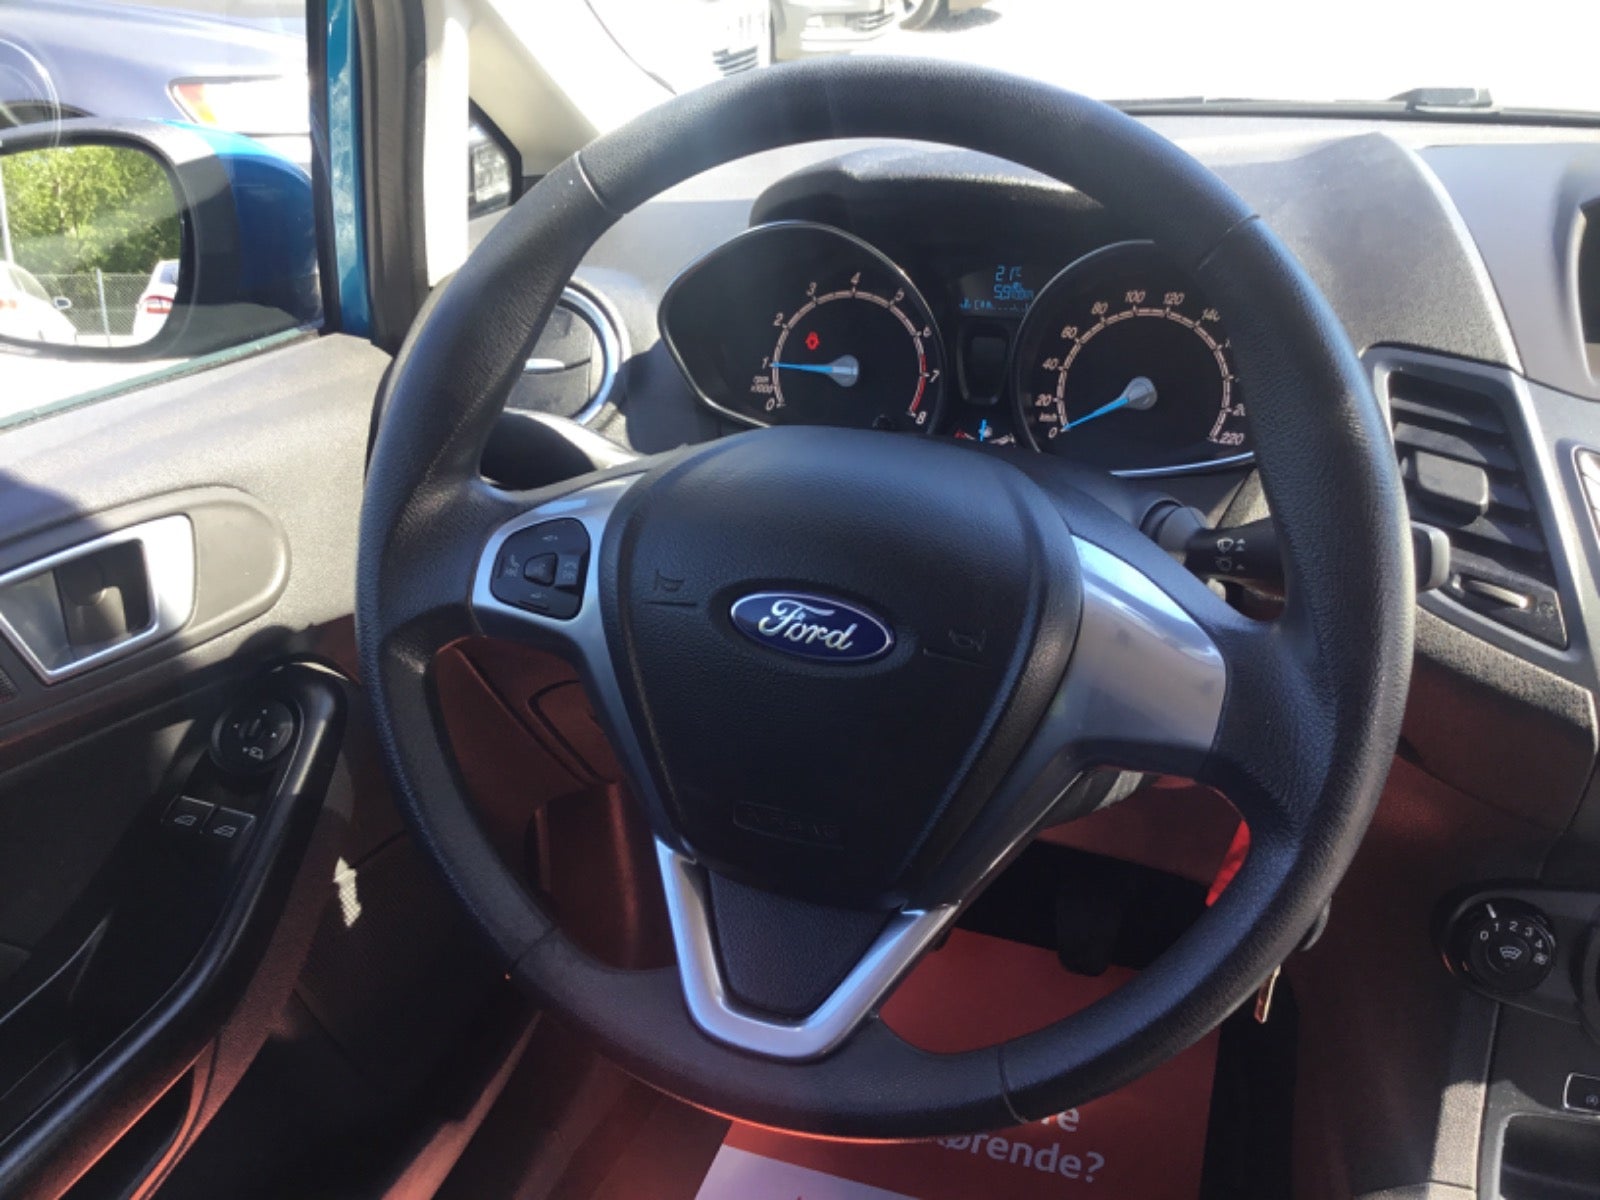 Ford Fiesta 1,0 80 Titanium Benzin modelår 2015 km 86000